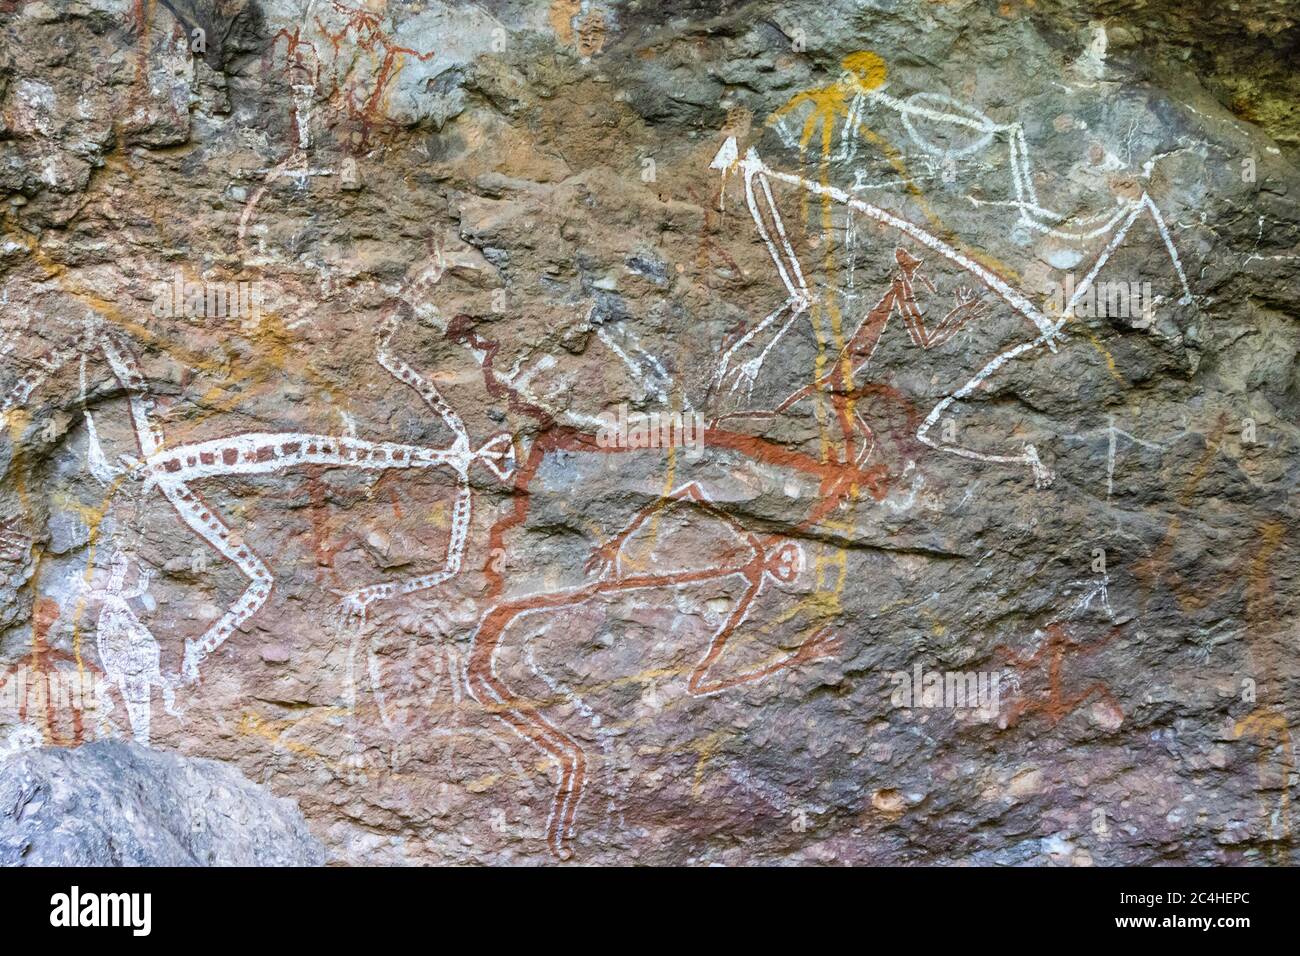 Burrungkuy, Australia - March 12th, 2020: Native aboriginal rock art depicting aboriginal people, animals and spirits Photo - Alamy